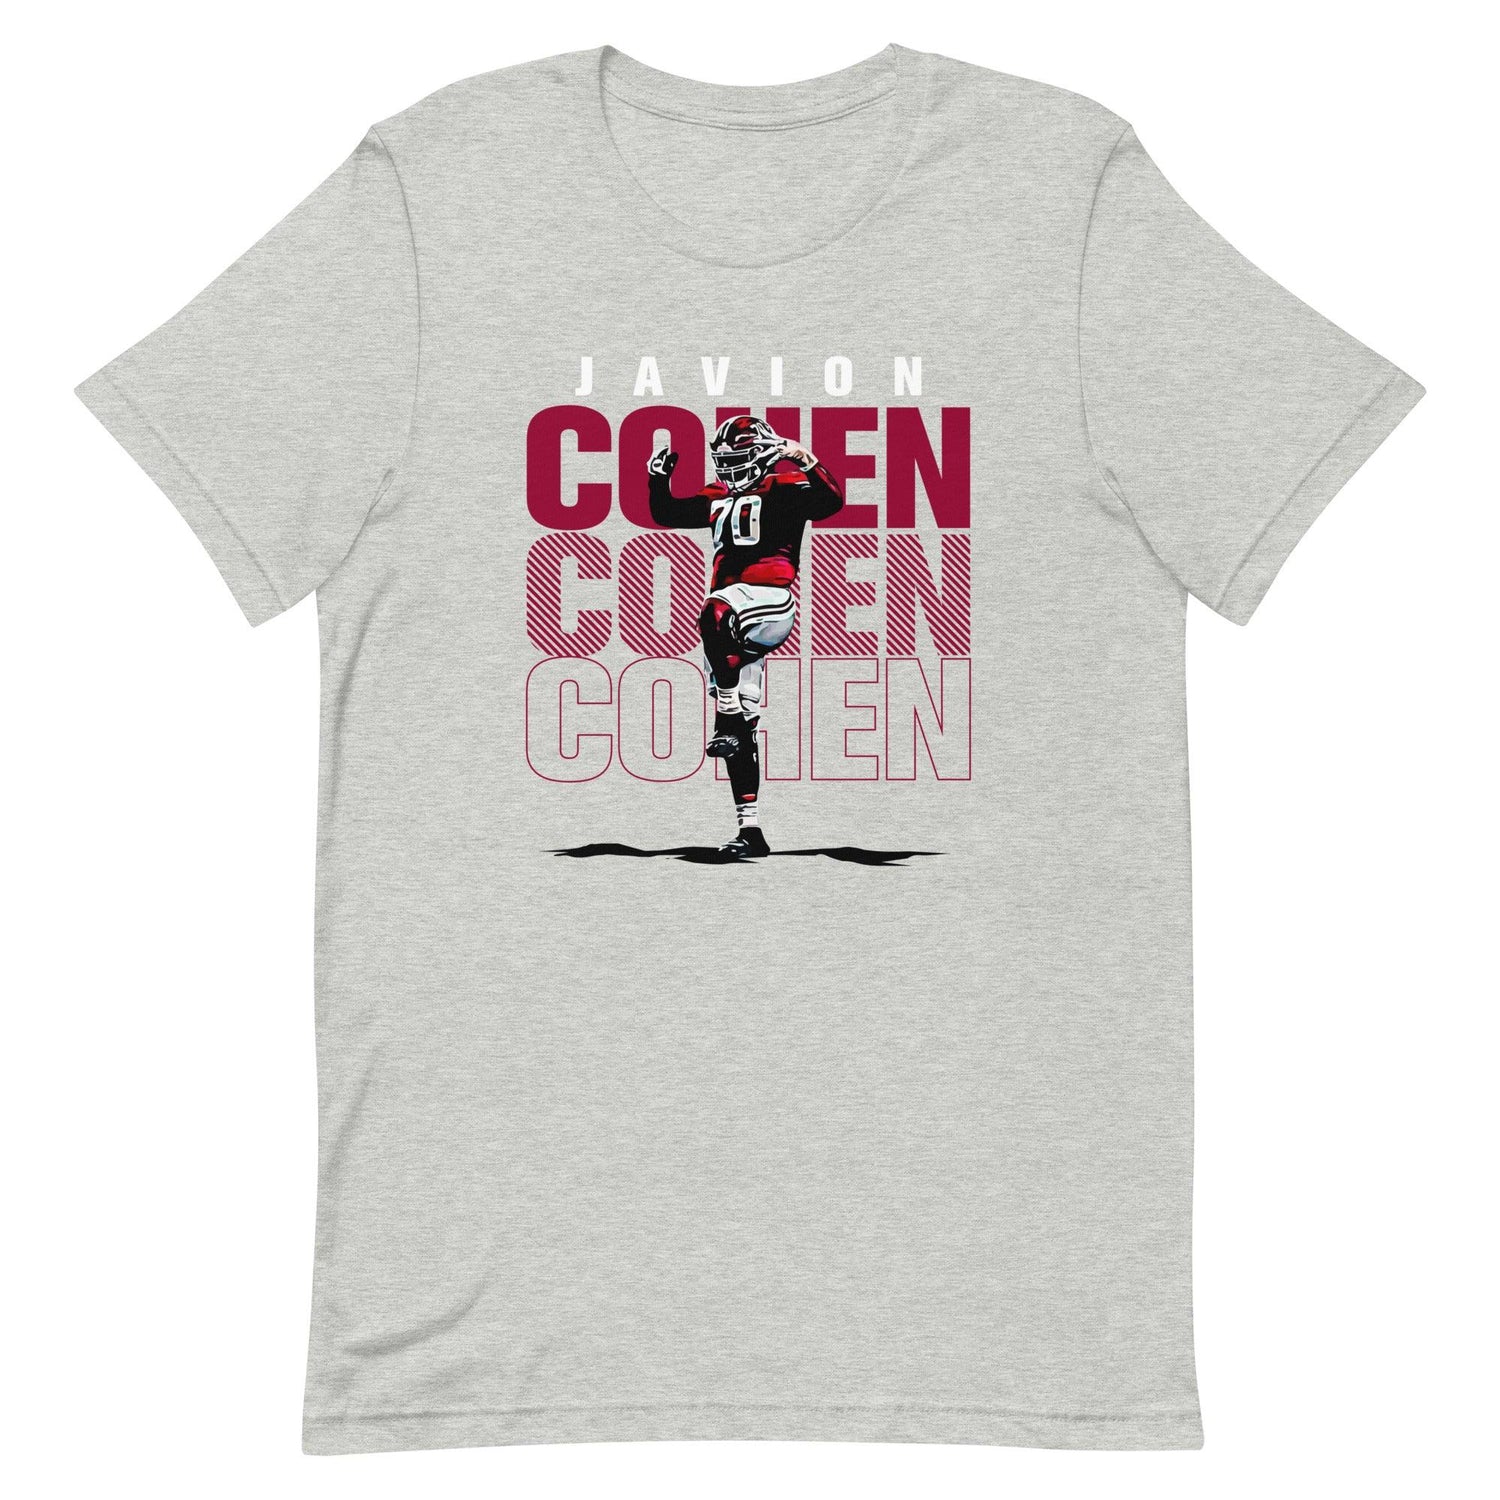 Javion Cohen "Celebrate" t-shirt - Fan Arch